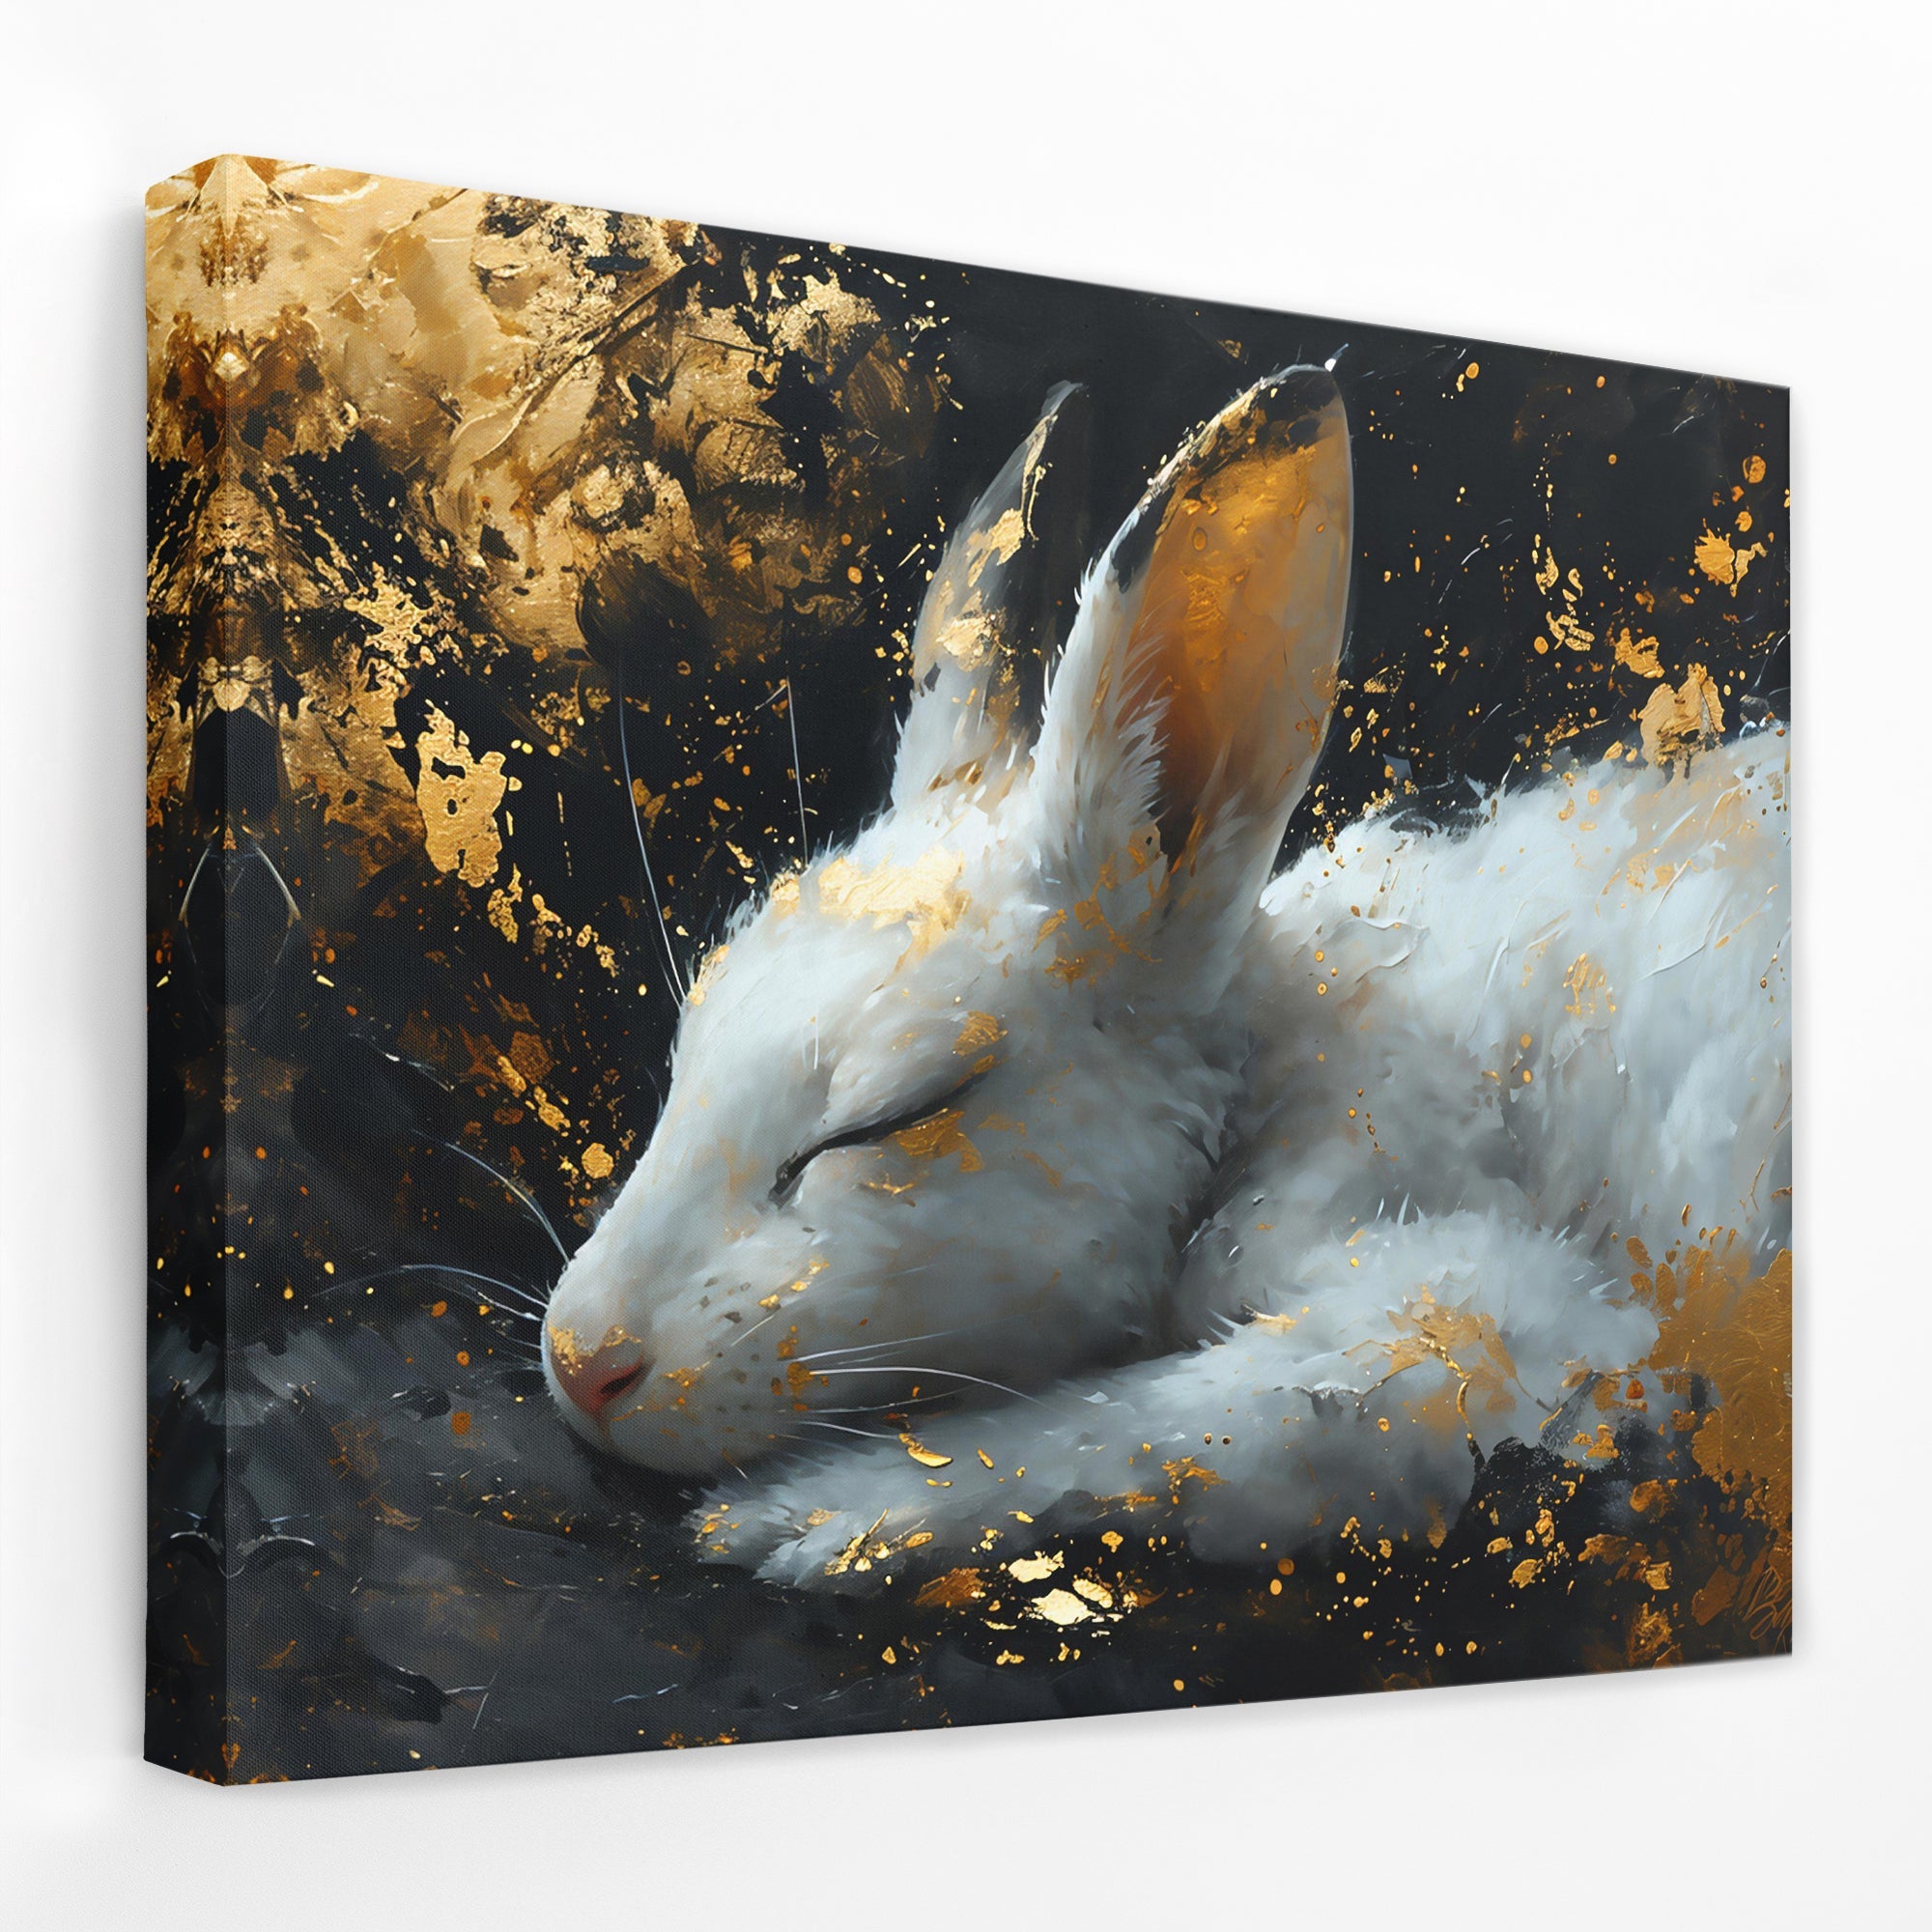 Sleeping Rabbit - Luxury Wall Art